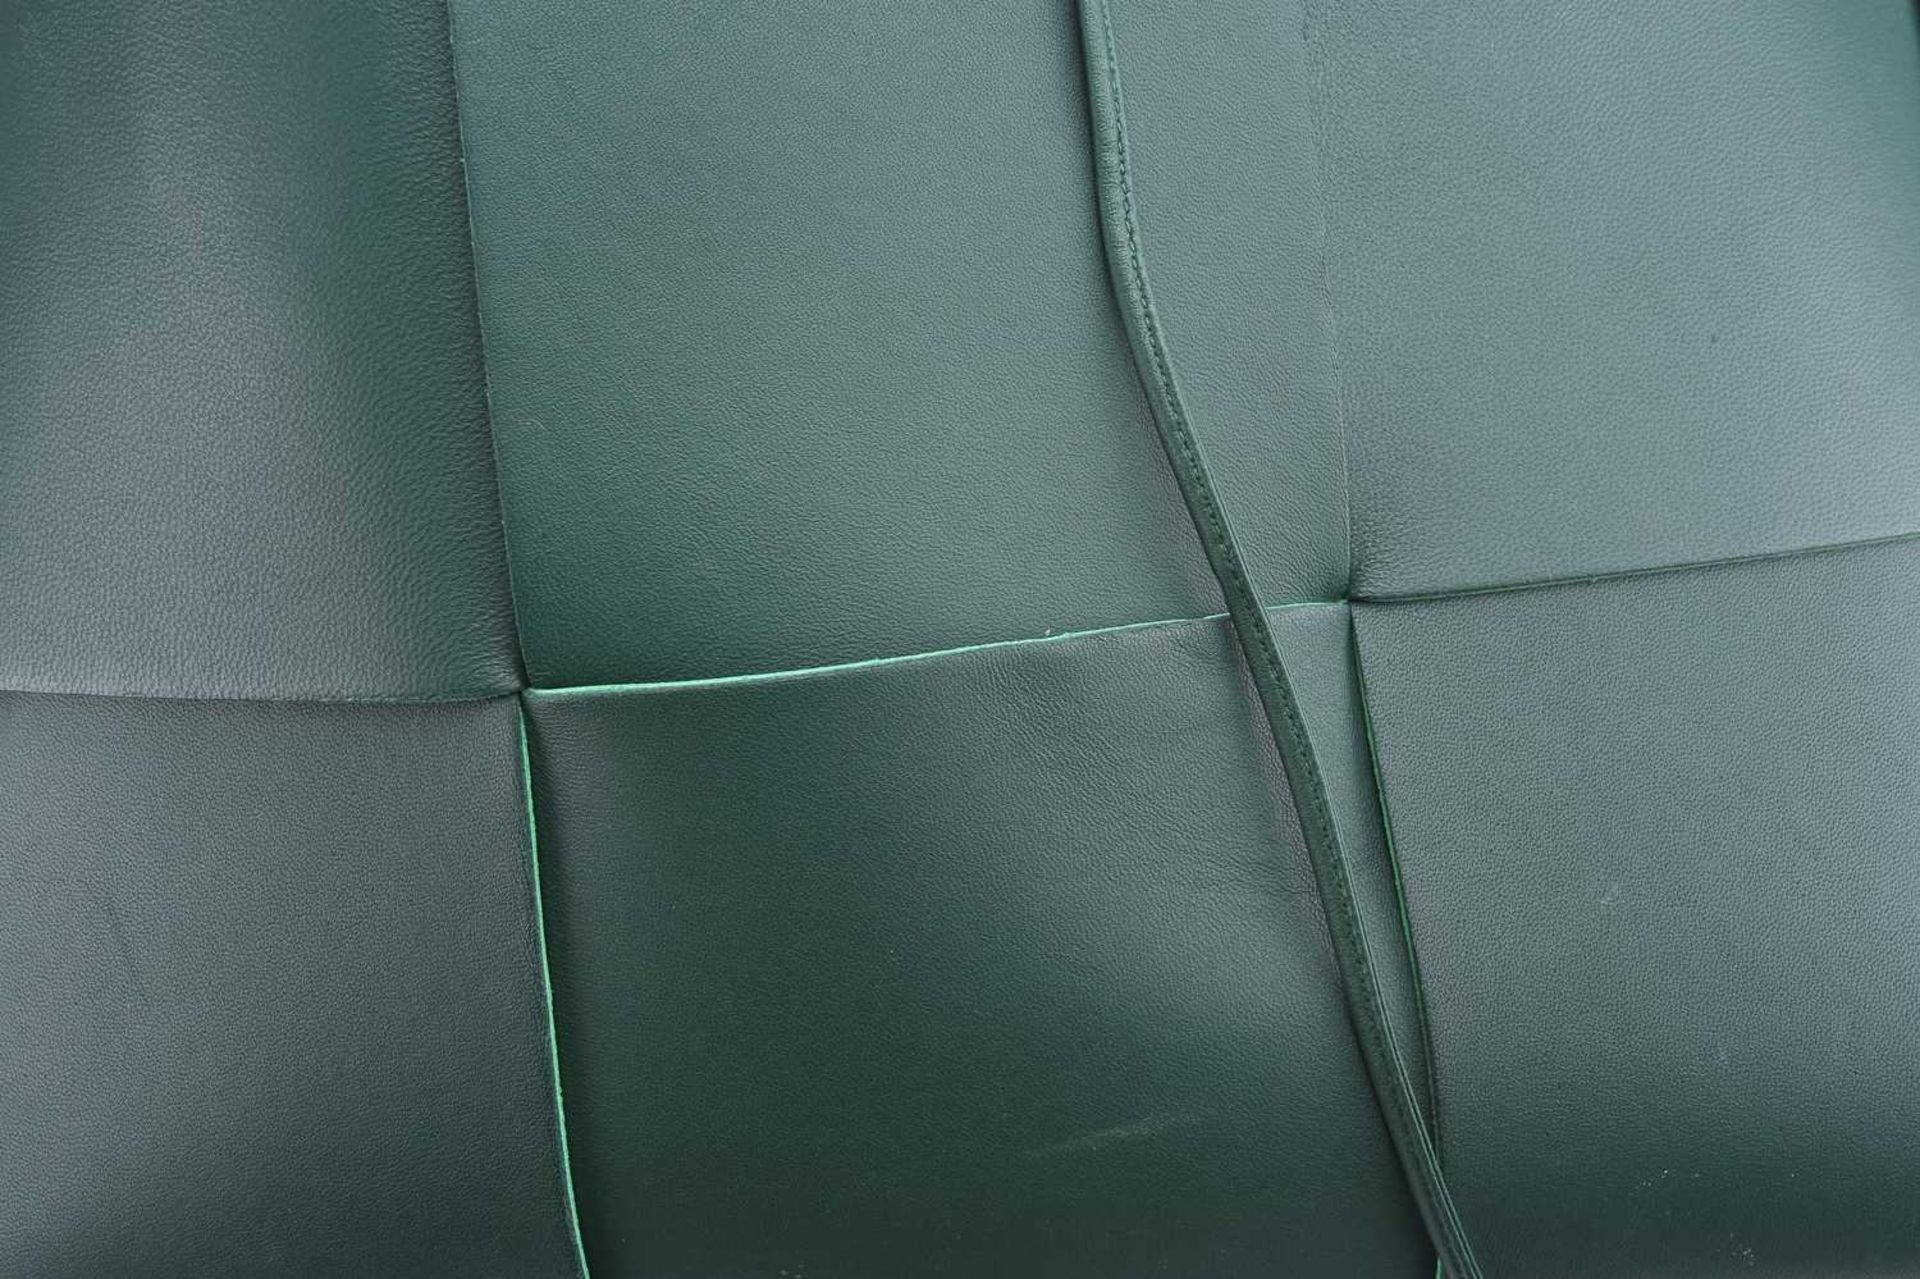 Bottega Veneta - a medium 'Arco' tote in hunter green and lime lambskin bonded leather, woven basket - Image 8 of 15